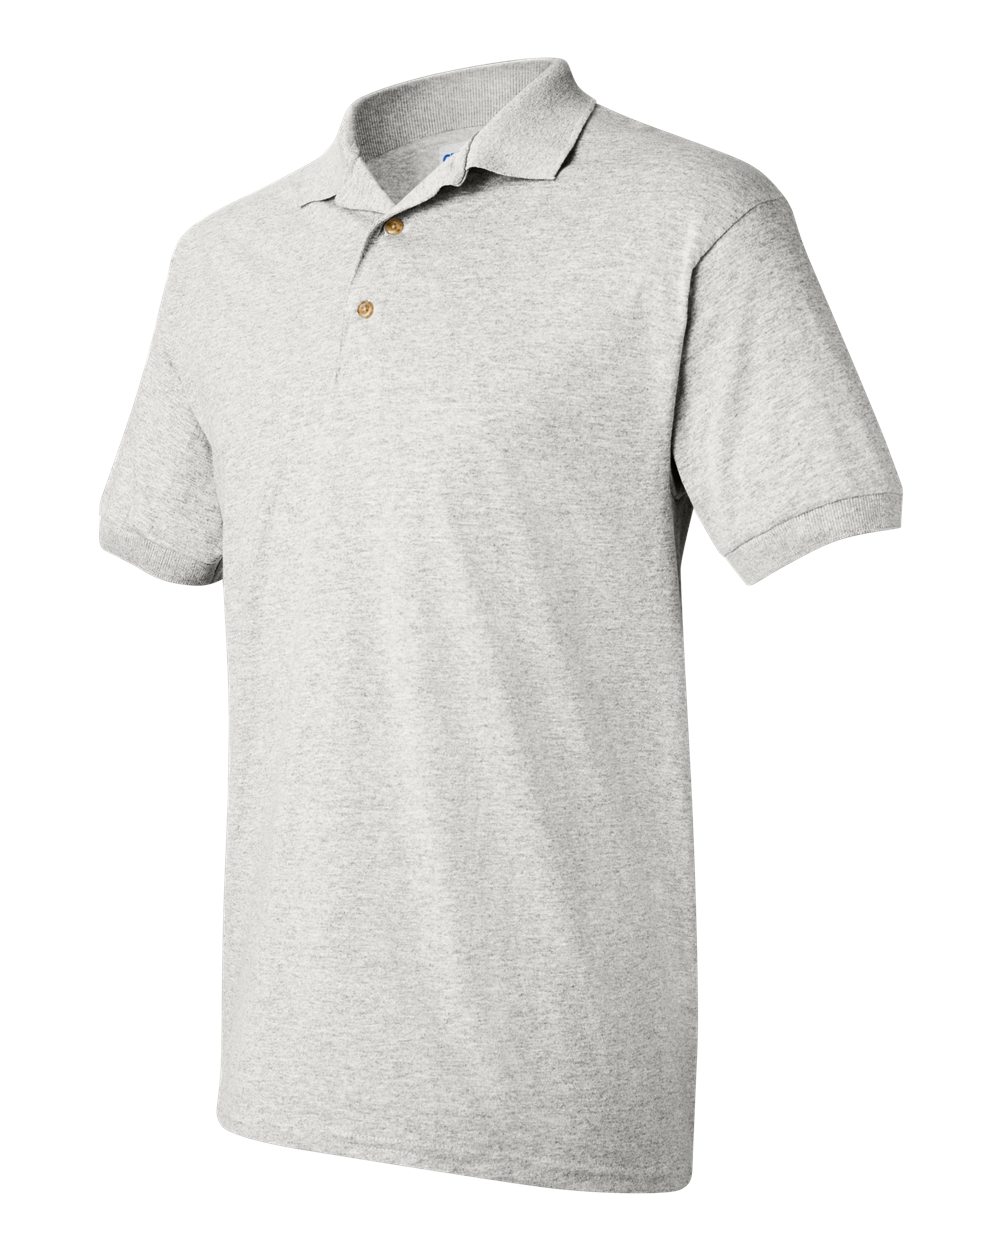 light gray dry blend jersey mens sport polo shirt side view